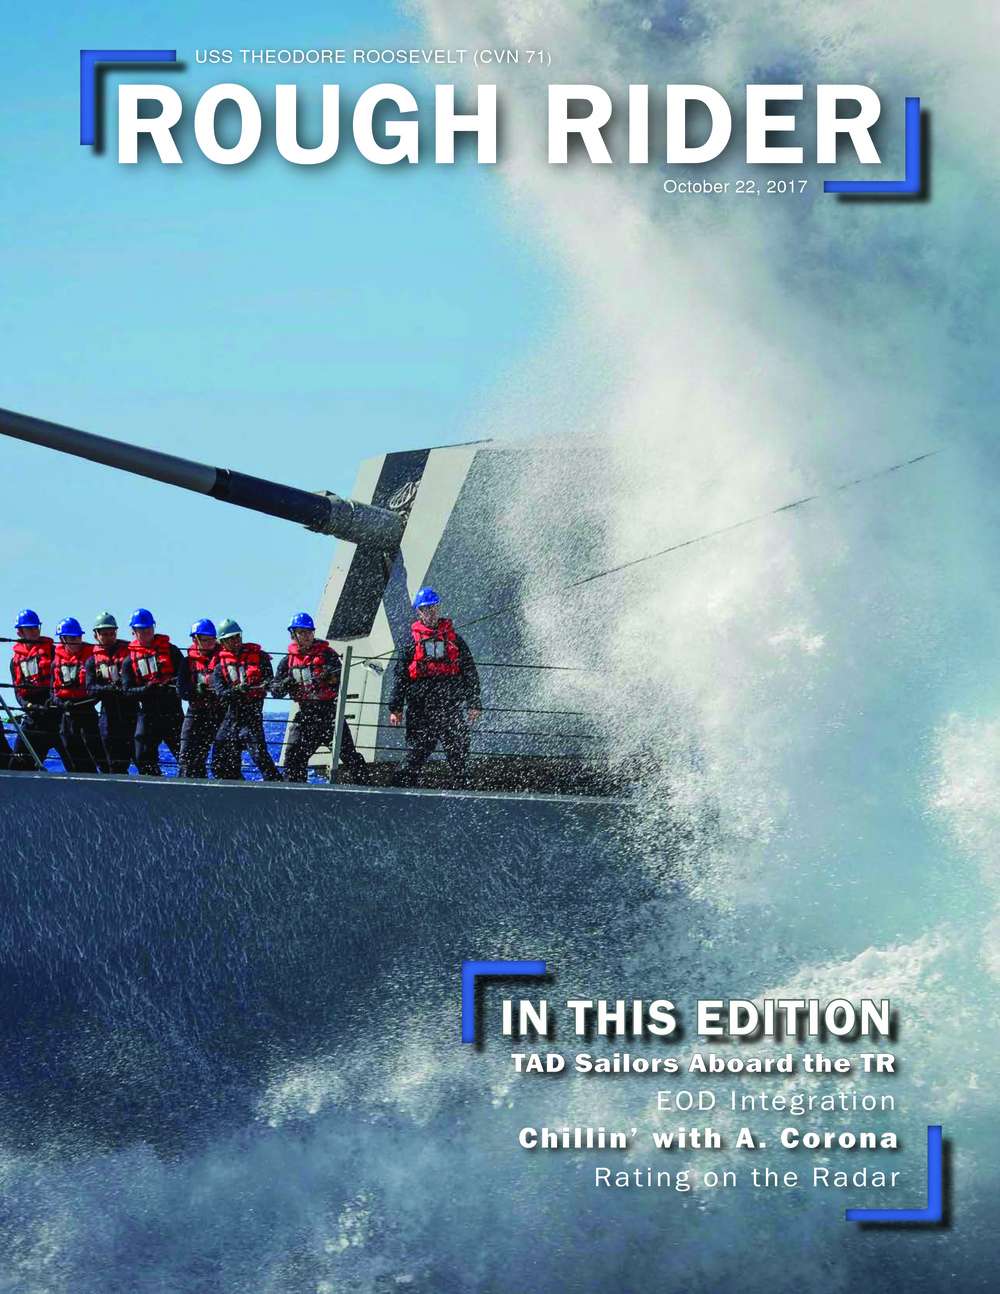 Rough Rider Magazine